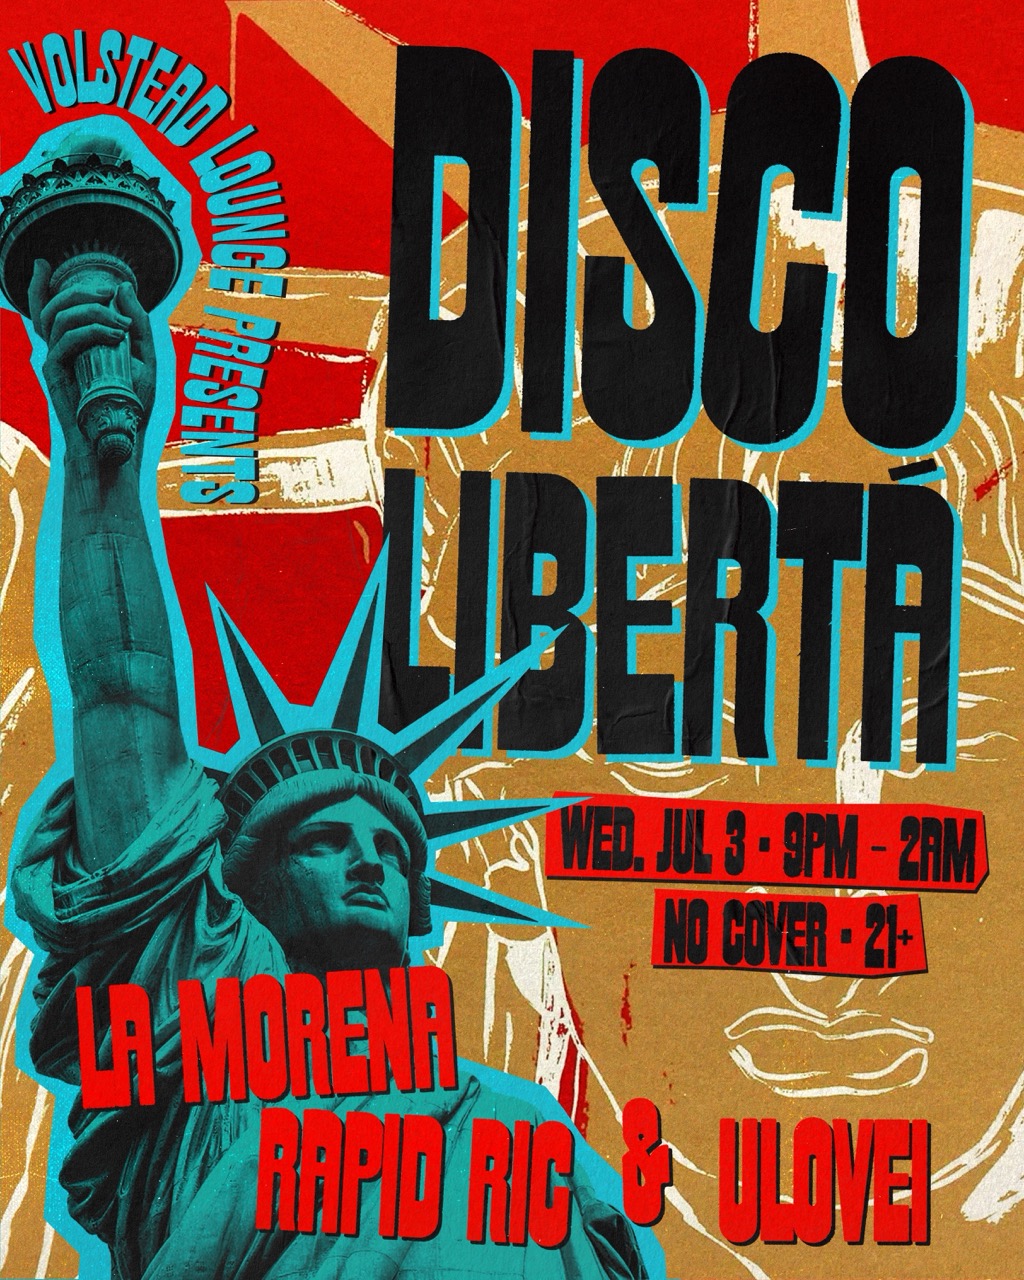 DISCO LIBERTÁ with La Morena, Rapid Ric, and ulovei @ Volstead Lounge